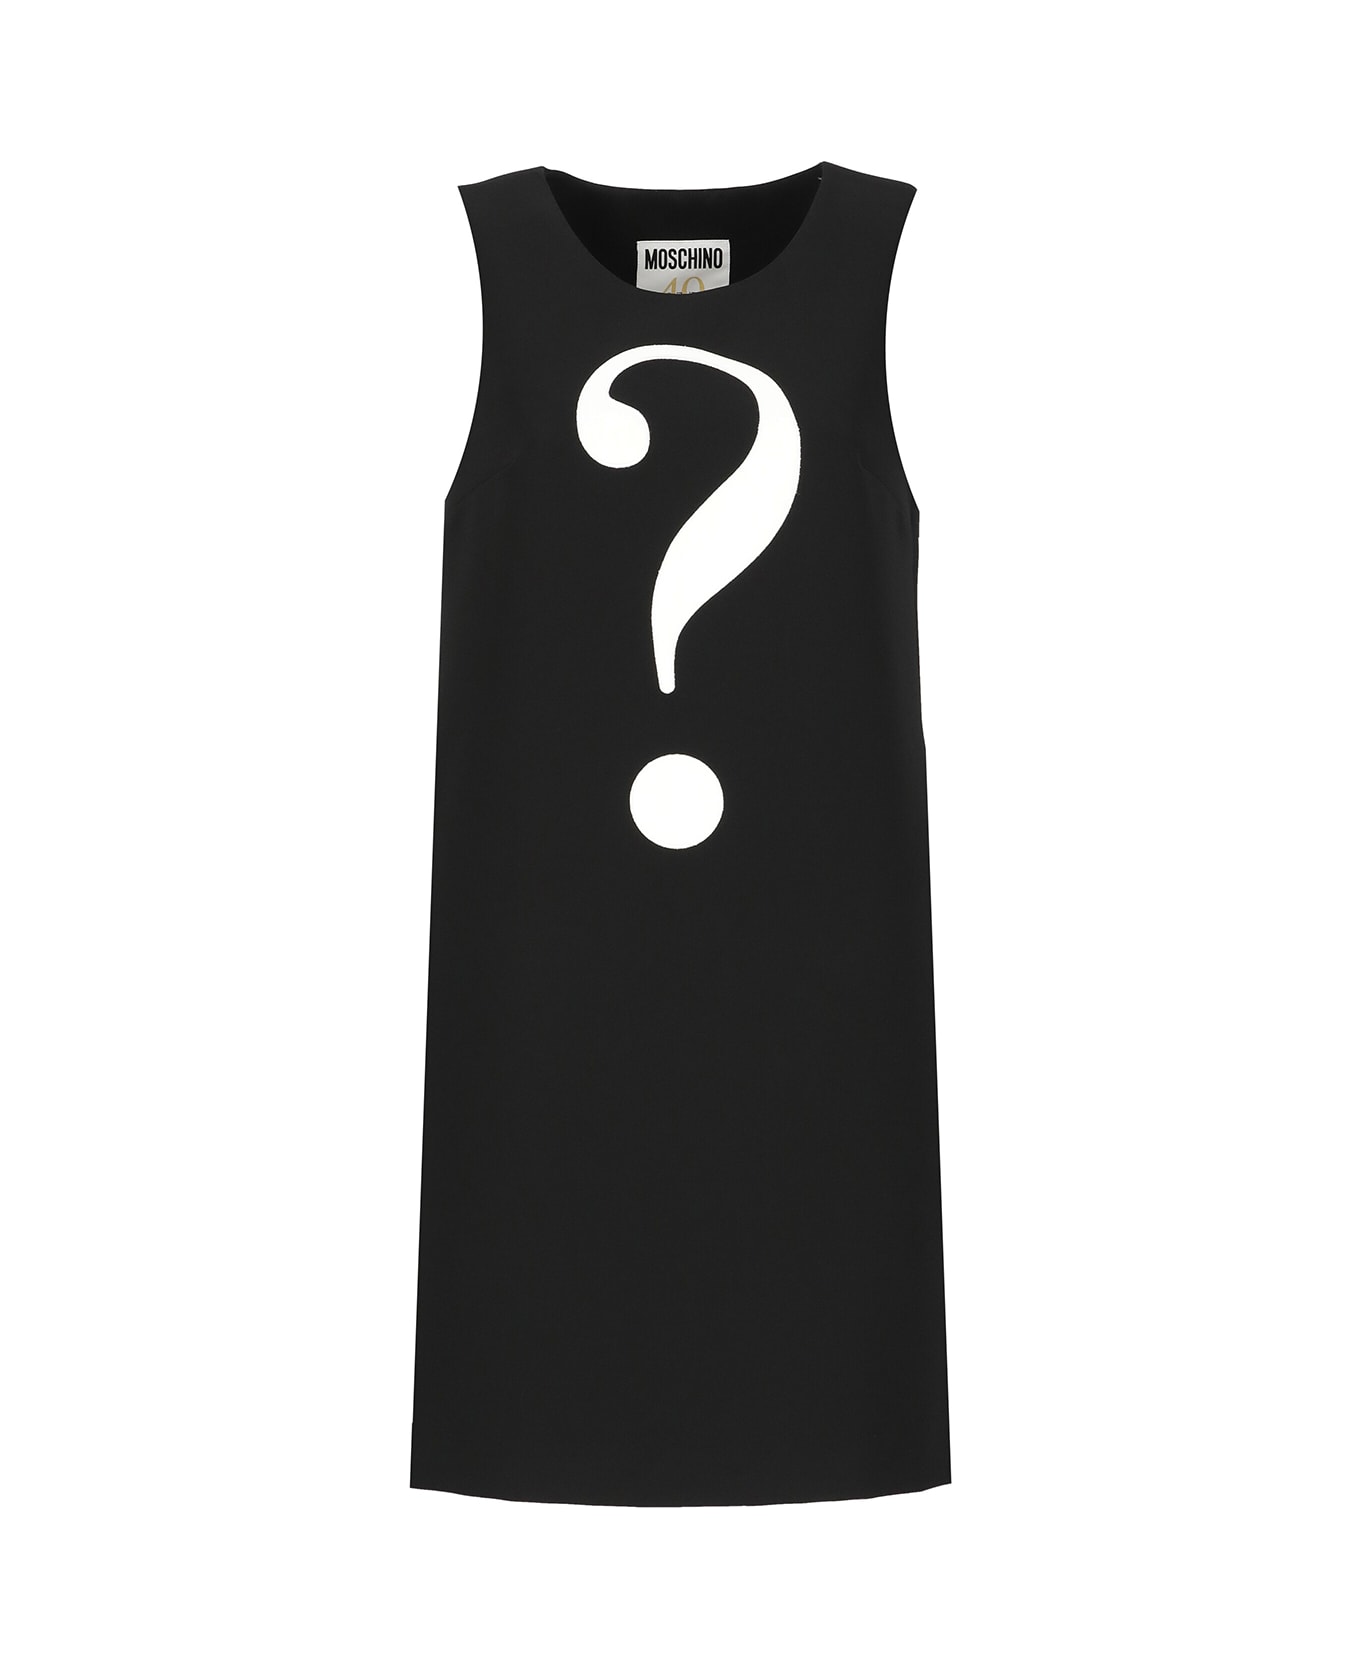 Moschino House Symbols Dress - Black タンクトップ